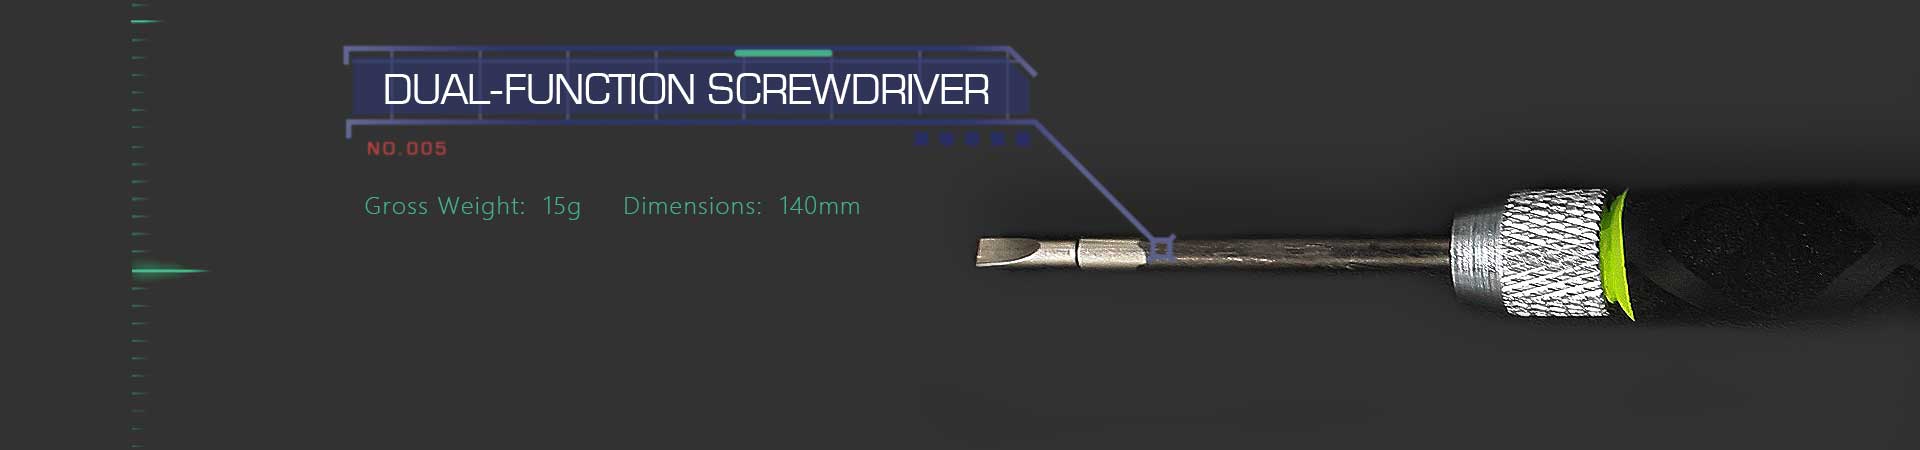 Advken Doctor Coil Tool Kit Dual-Function Screw Driver